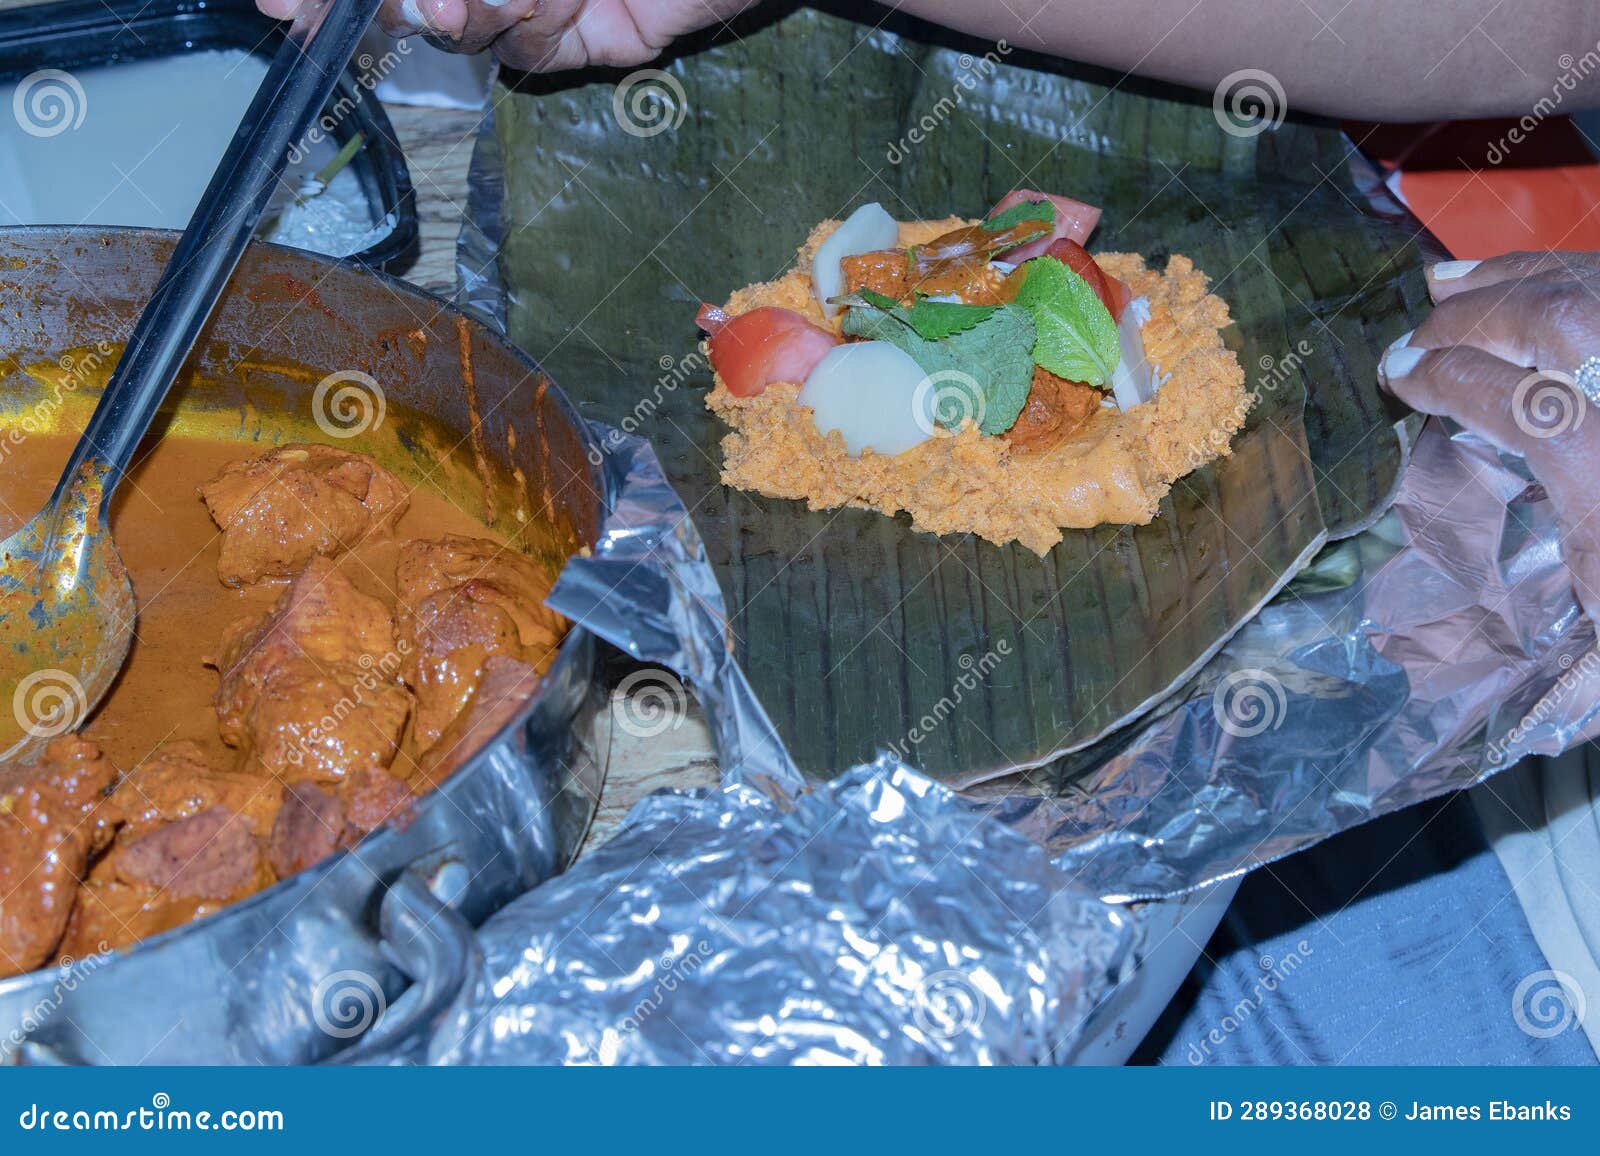 photo of nicaragua tamales being prepared